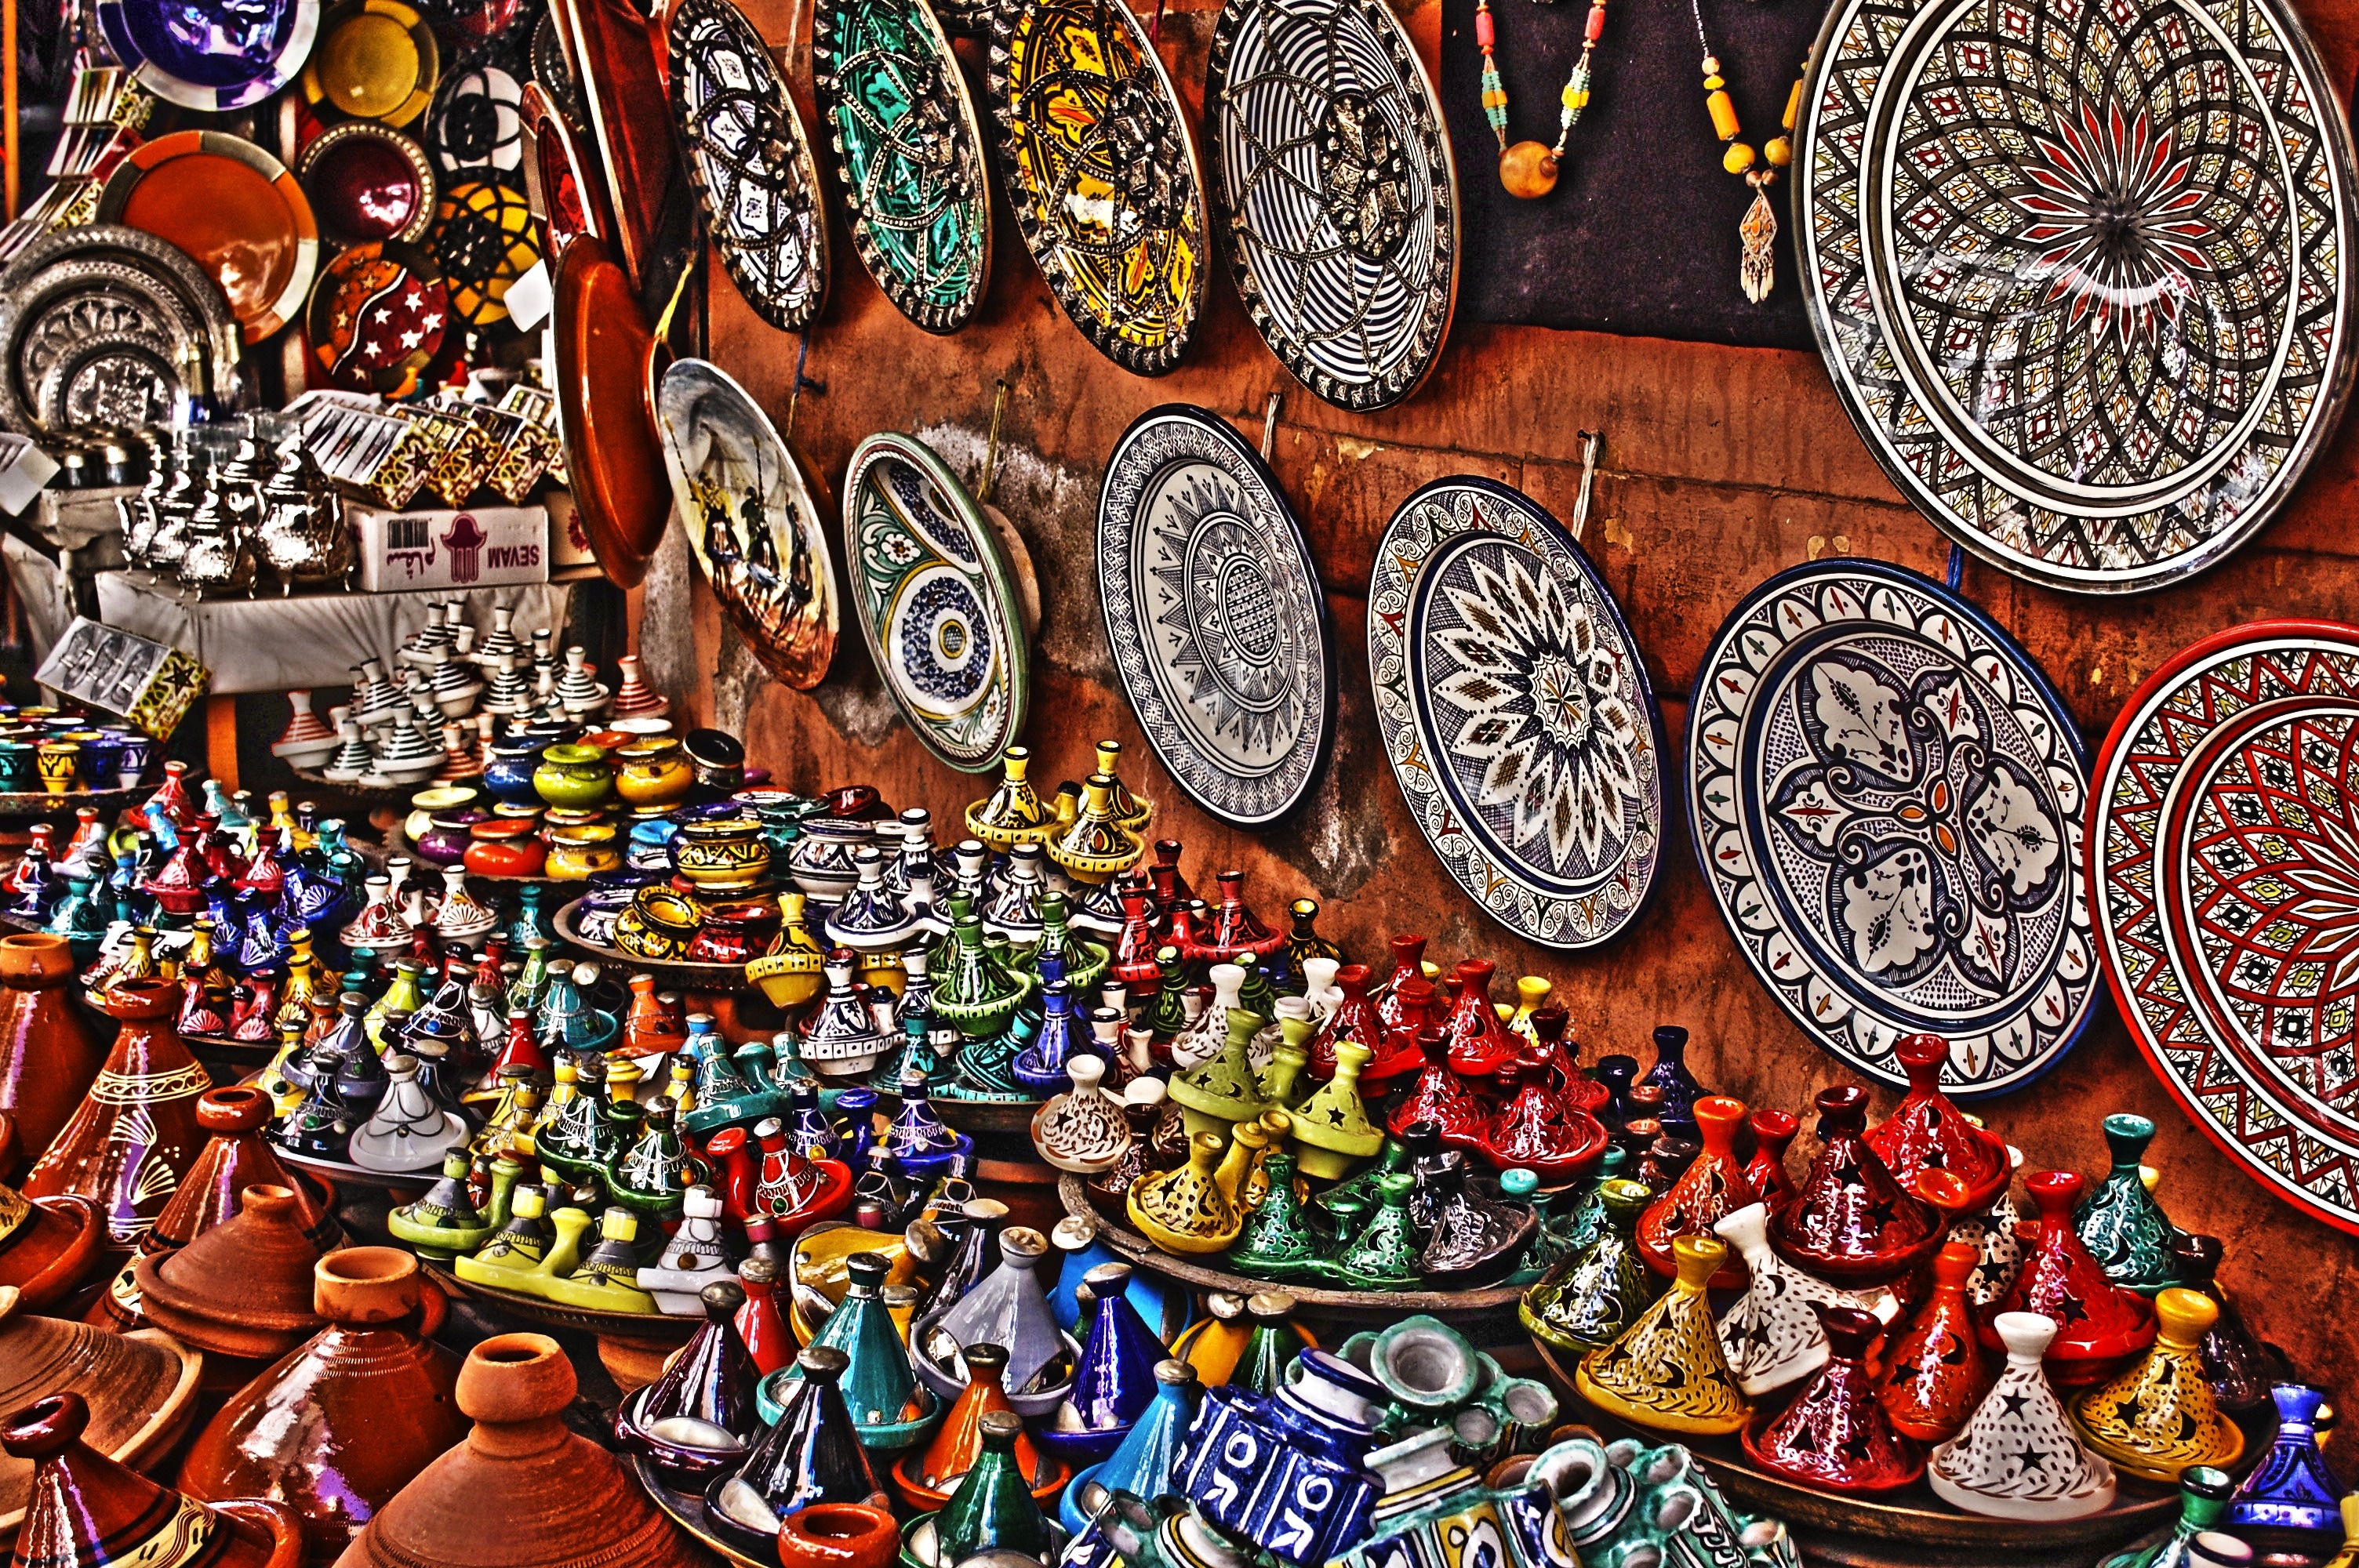 figurine lot and displaying plates